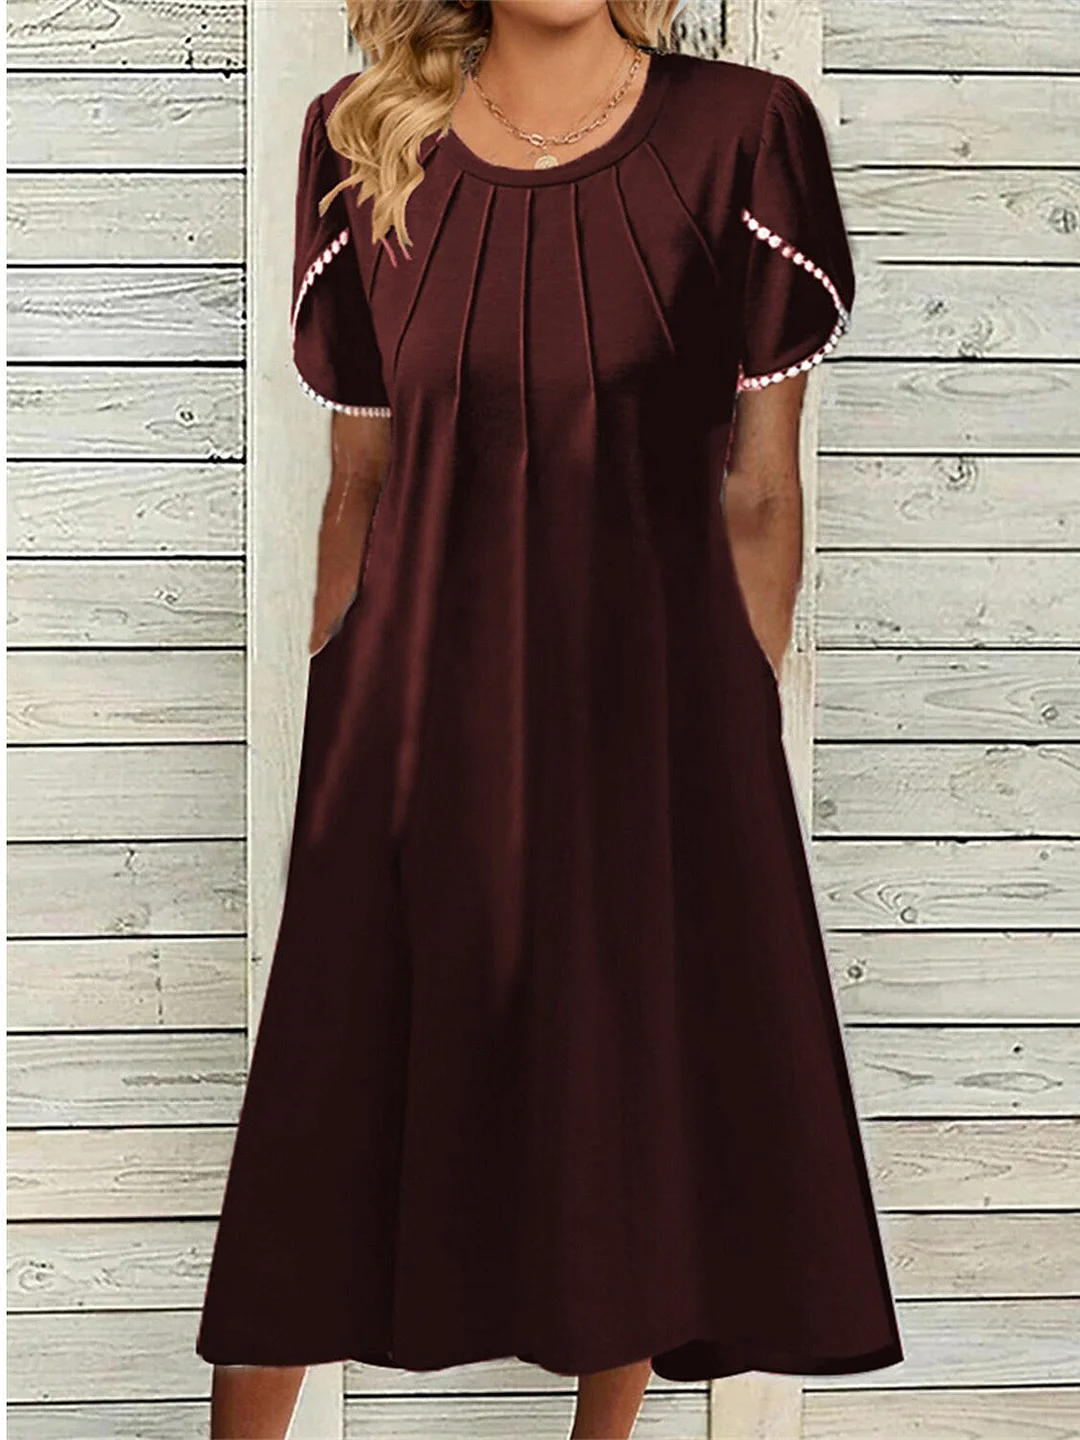 Women's Short Sleeve Scoop Neck Solid Color Casual Pocket Dress